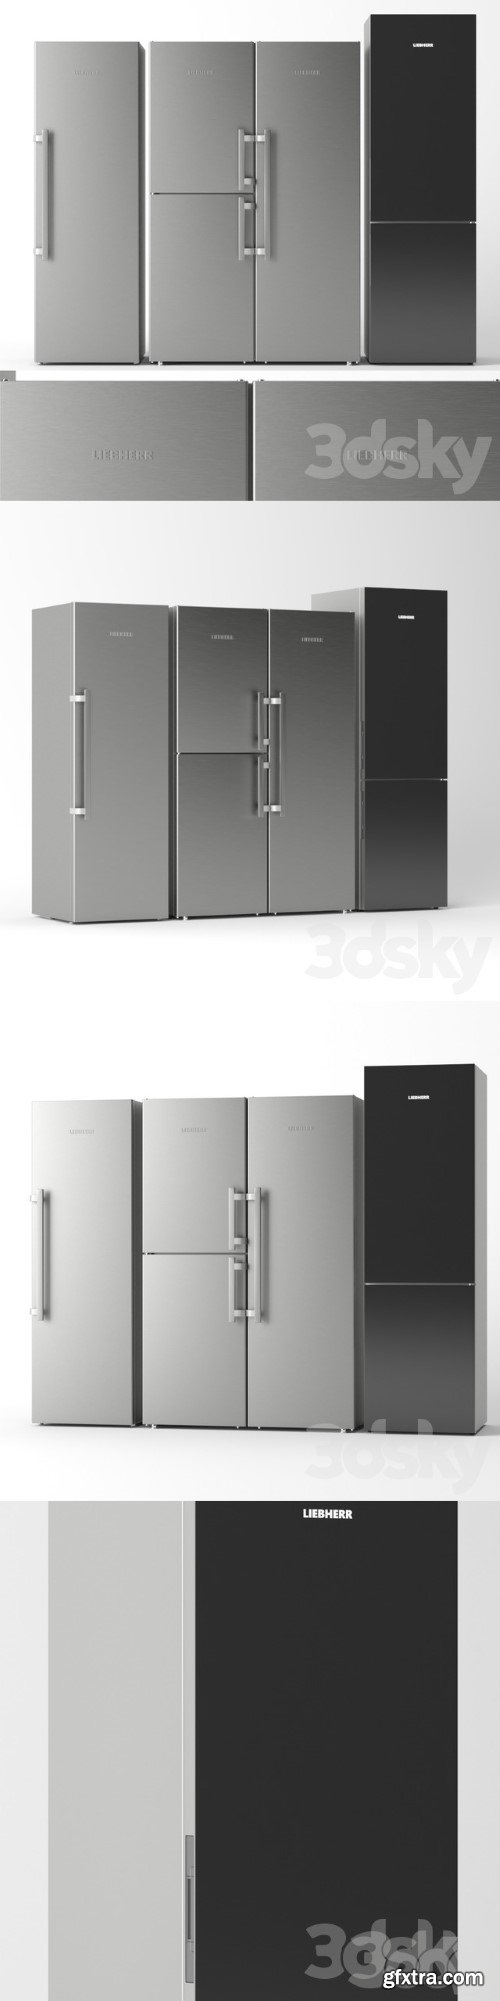 Pro 3DSky - Refrigerator set Liebherr